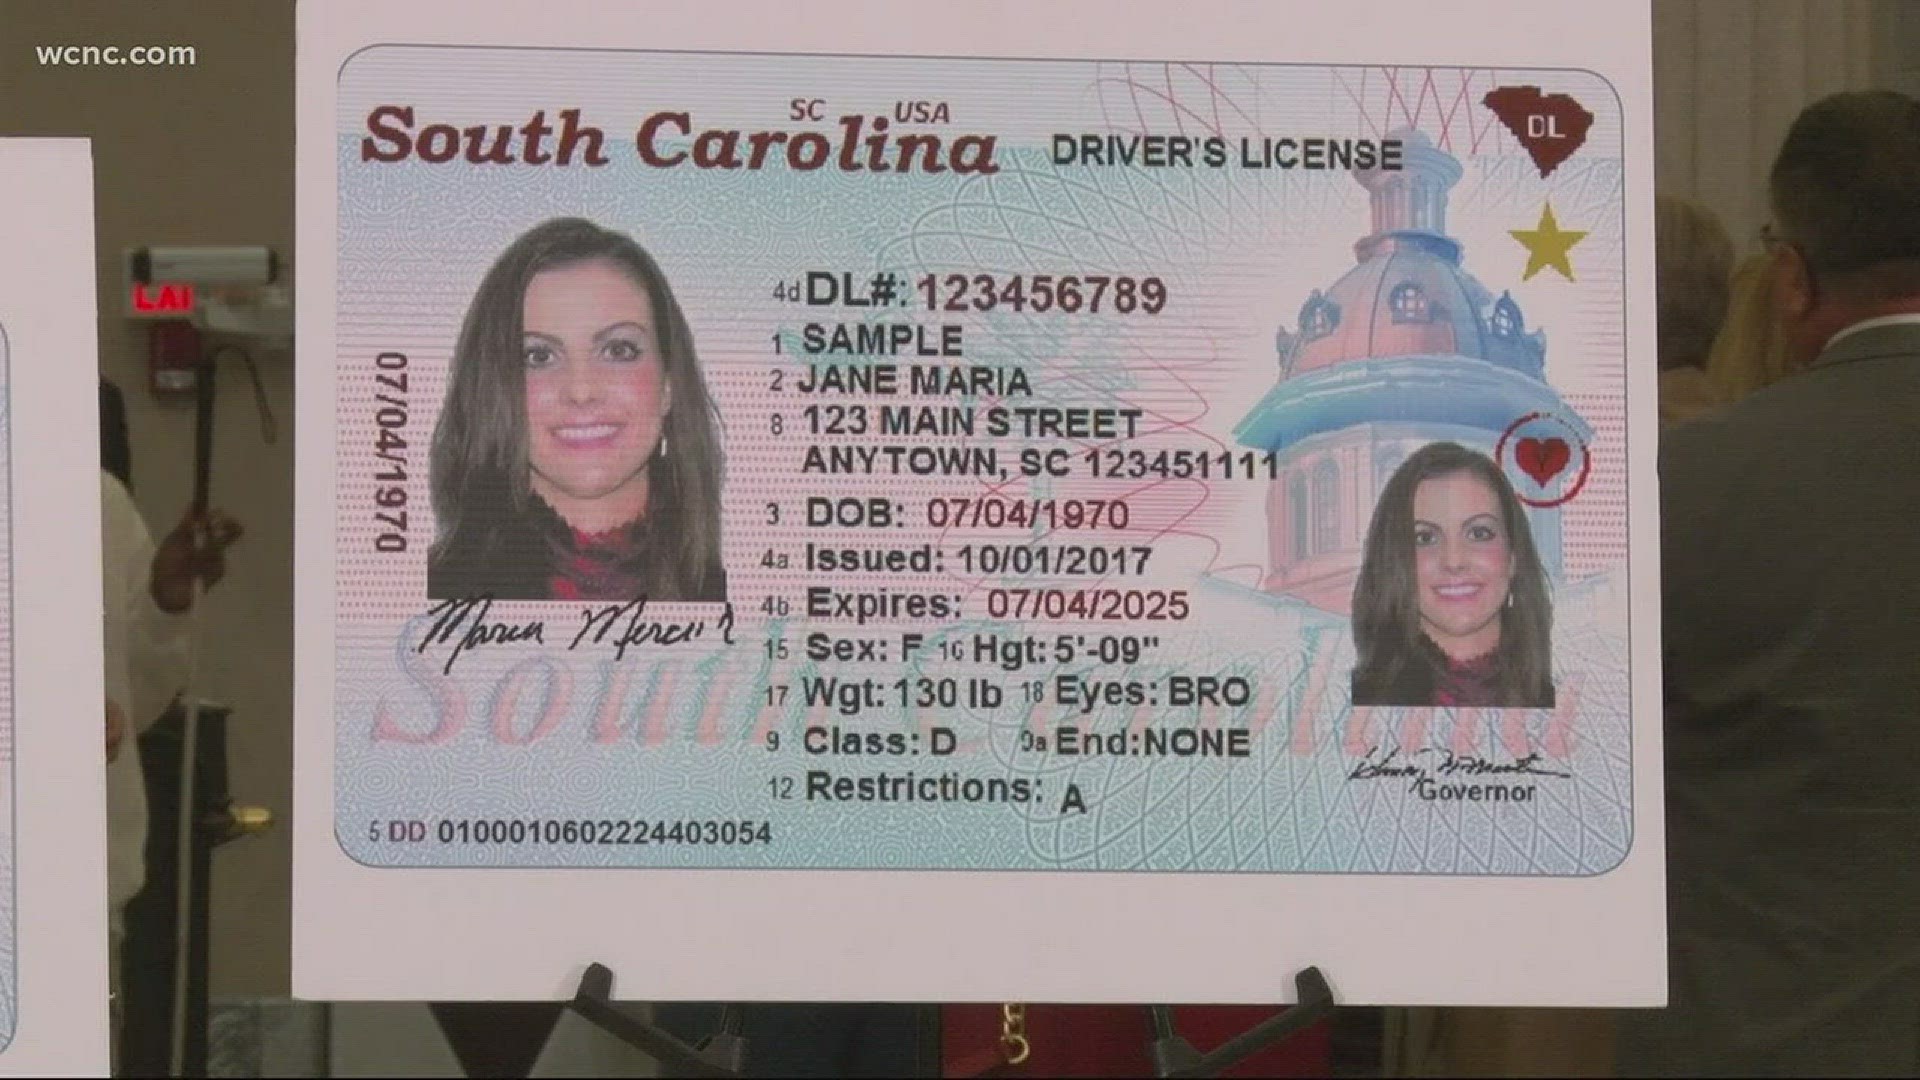 South Carolina id card front and back